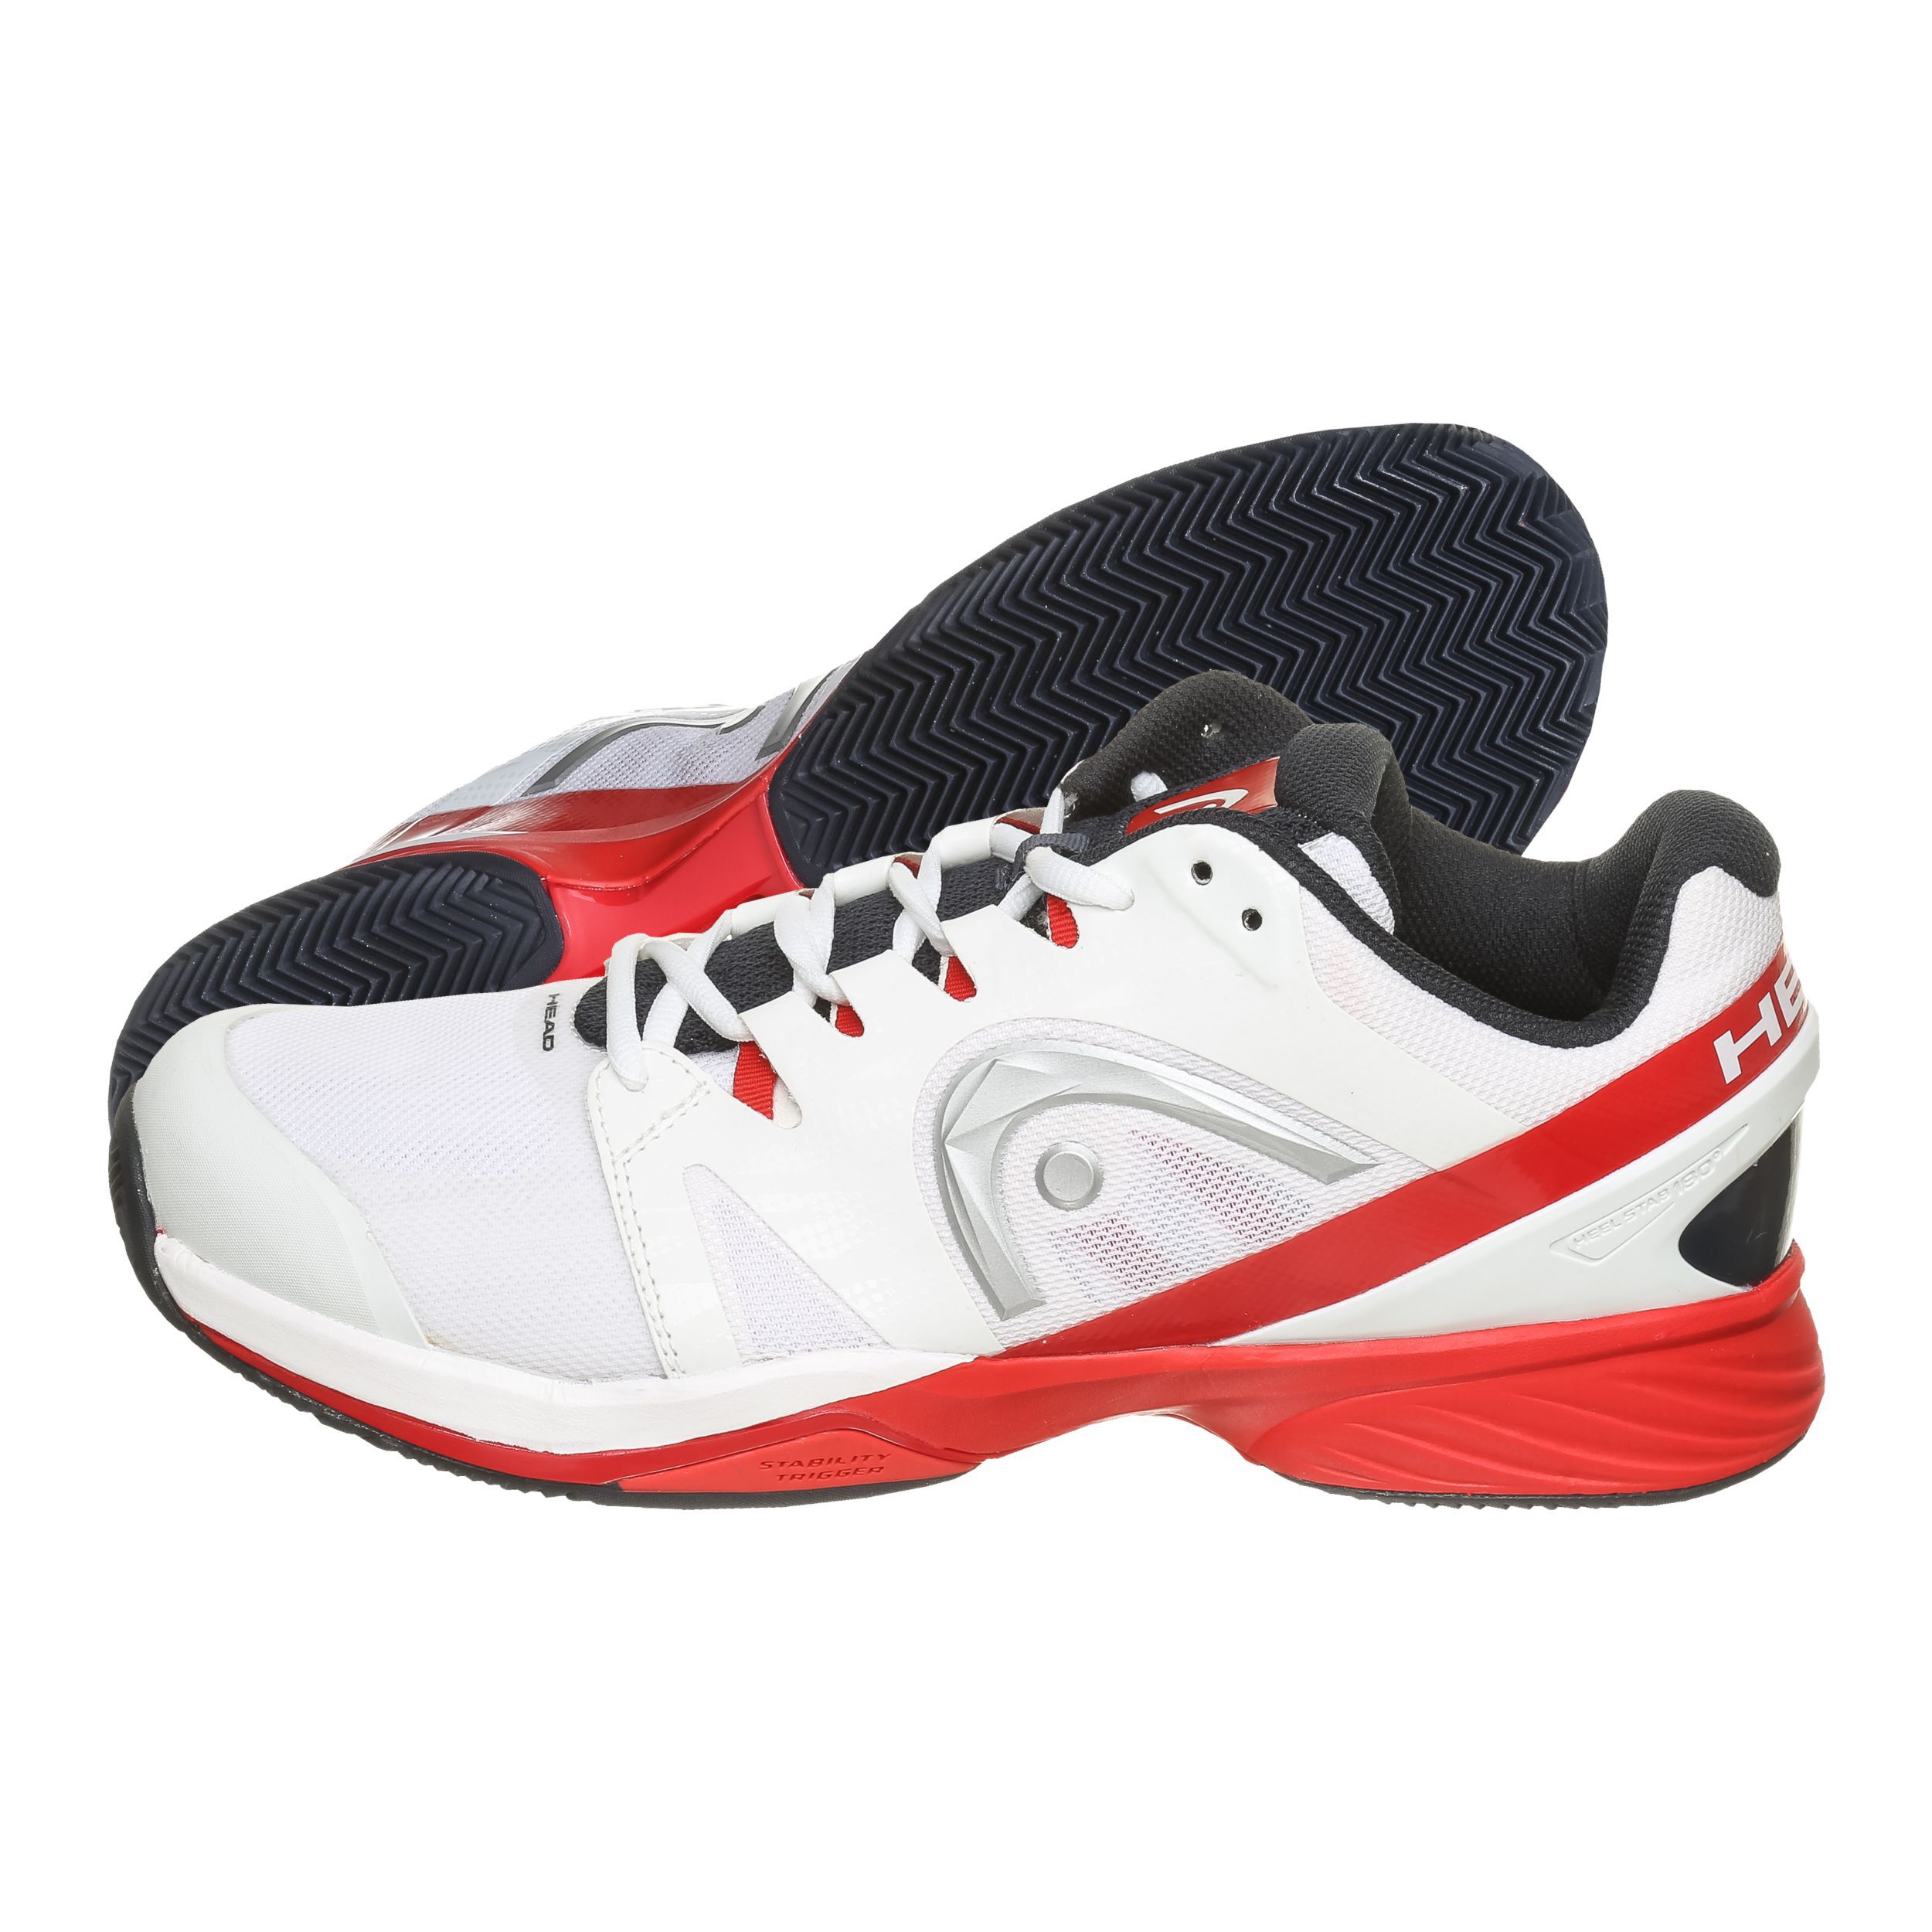 head nitro pro tennis shoes